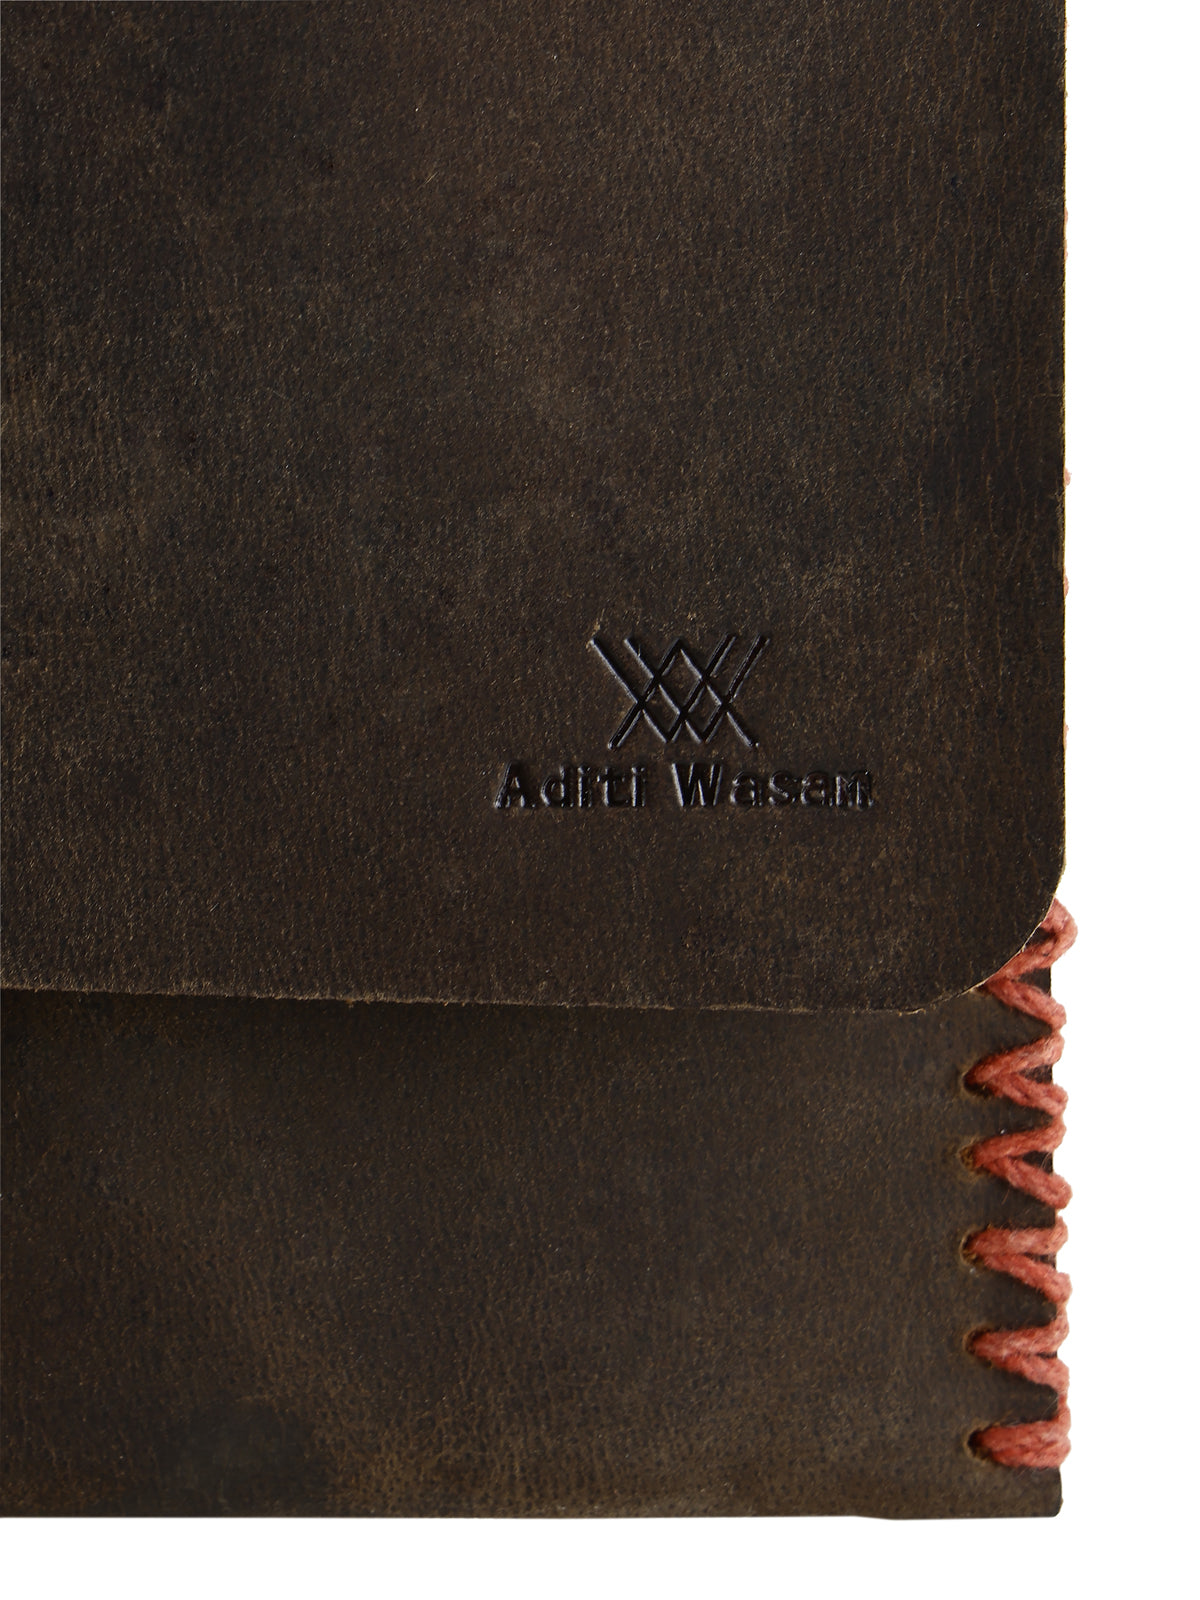 Genunie Leather Brown Antic Design Travel Wallet for Men & Women